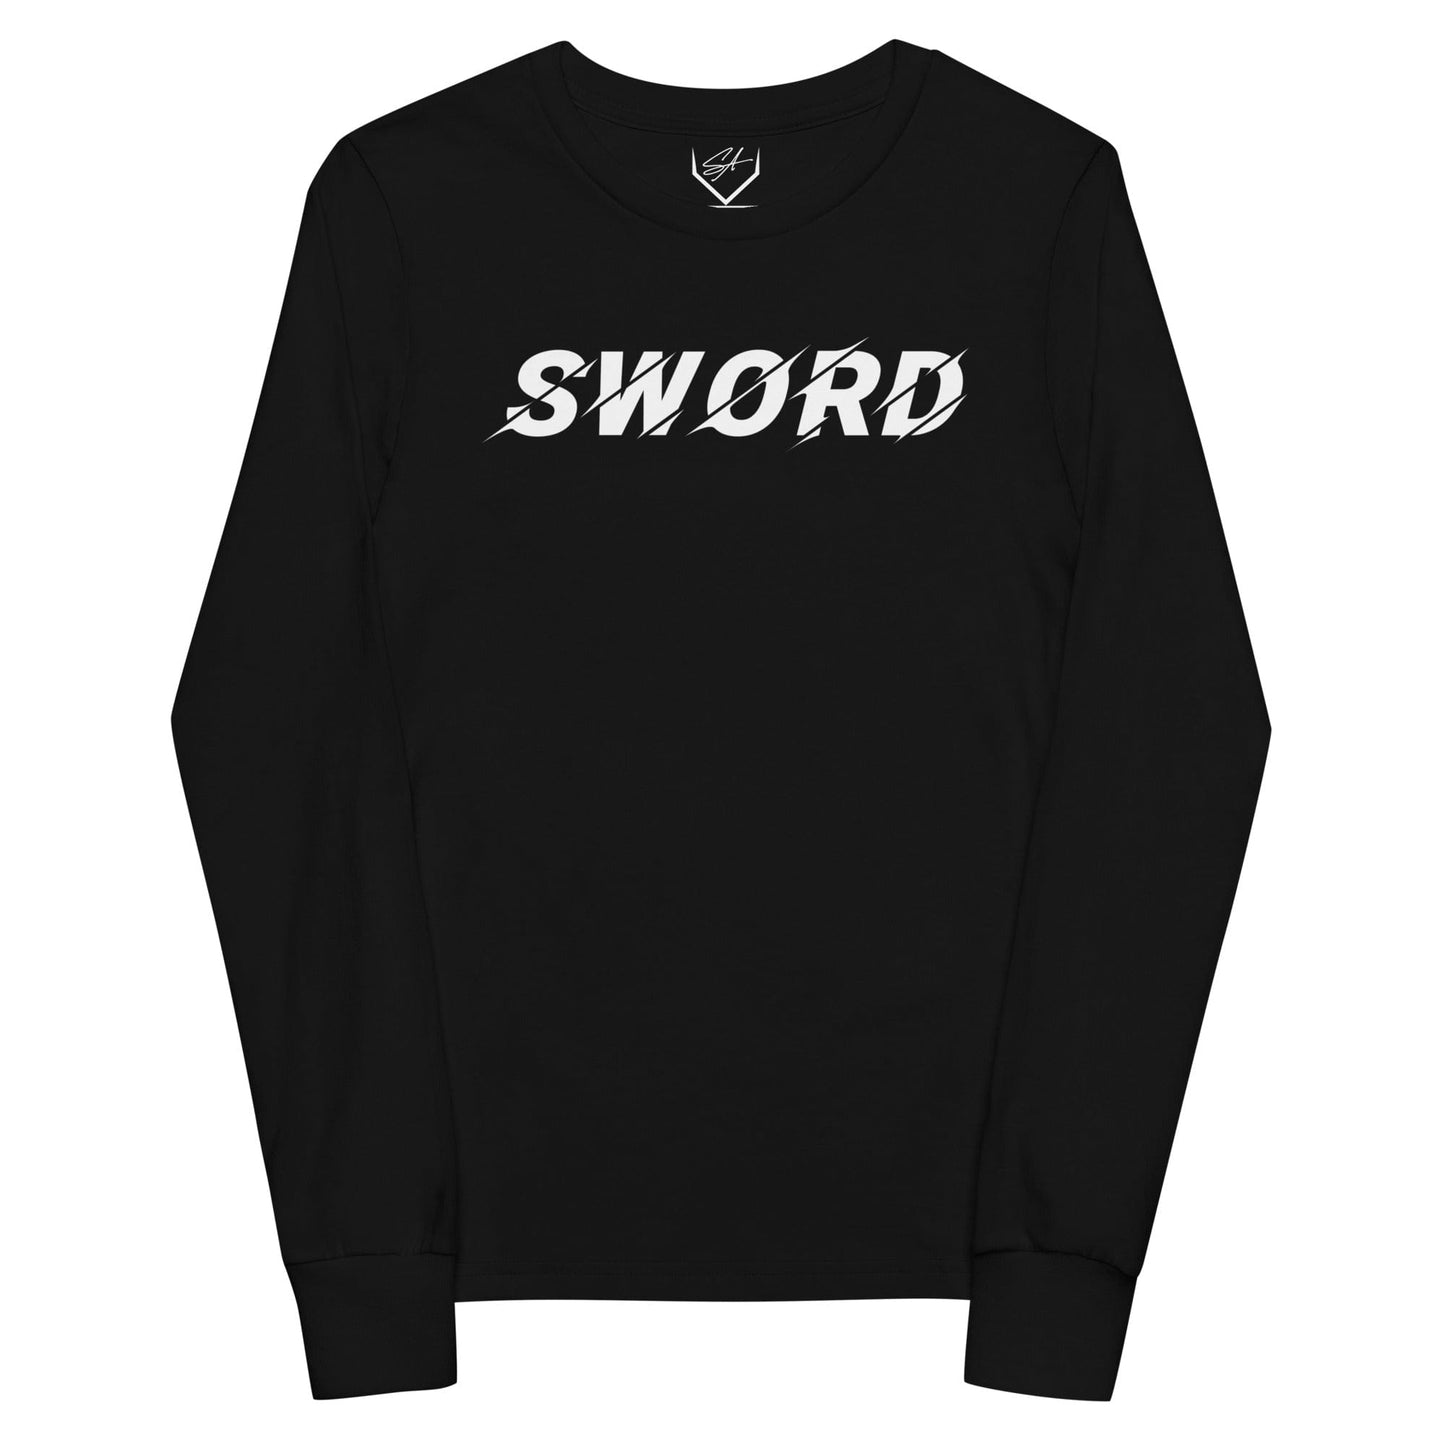 Sword - Youth Long Sleeve